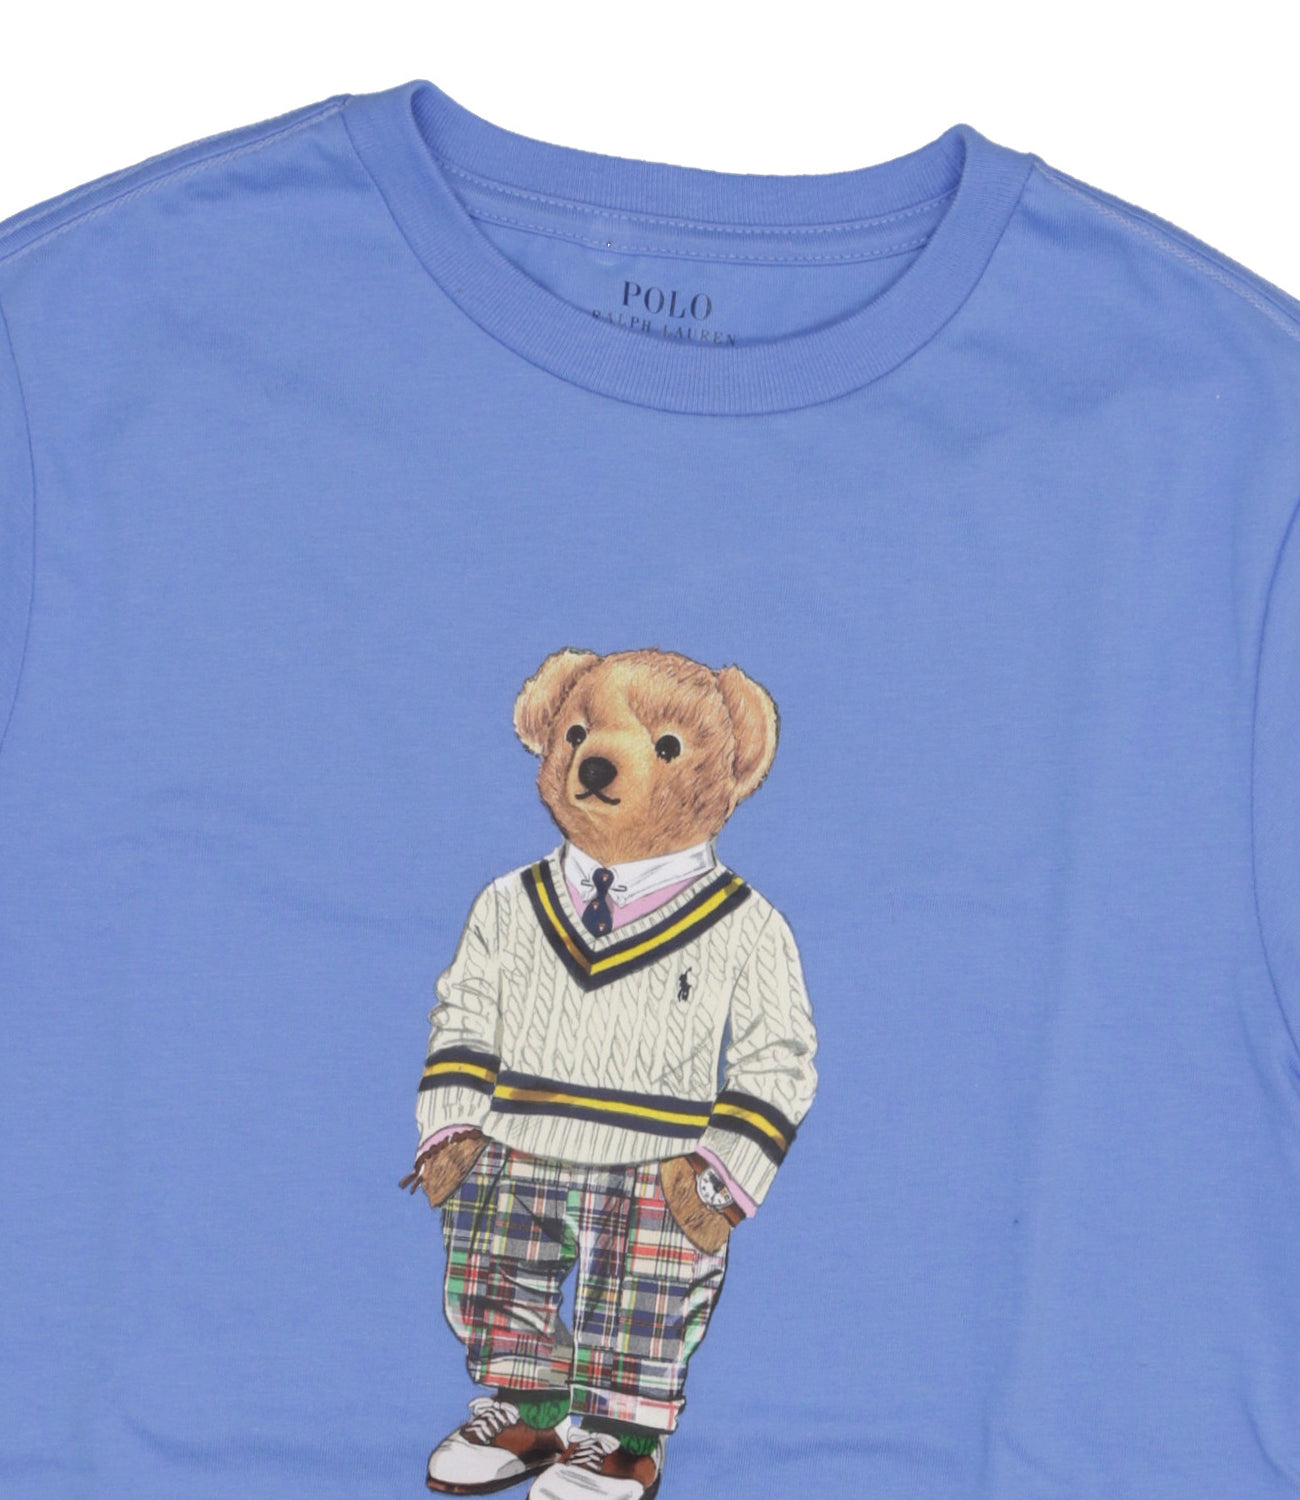 Ralph Lauren Childrenswear |T-Shirt Azzurro